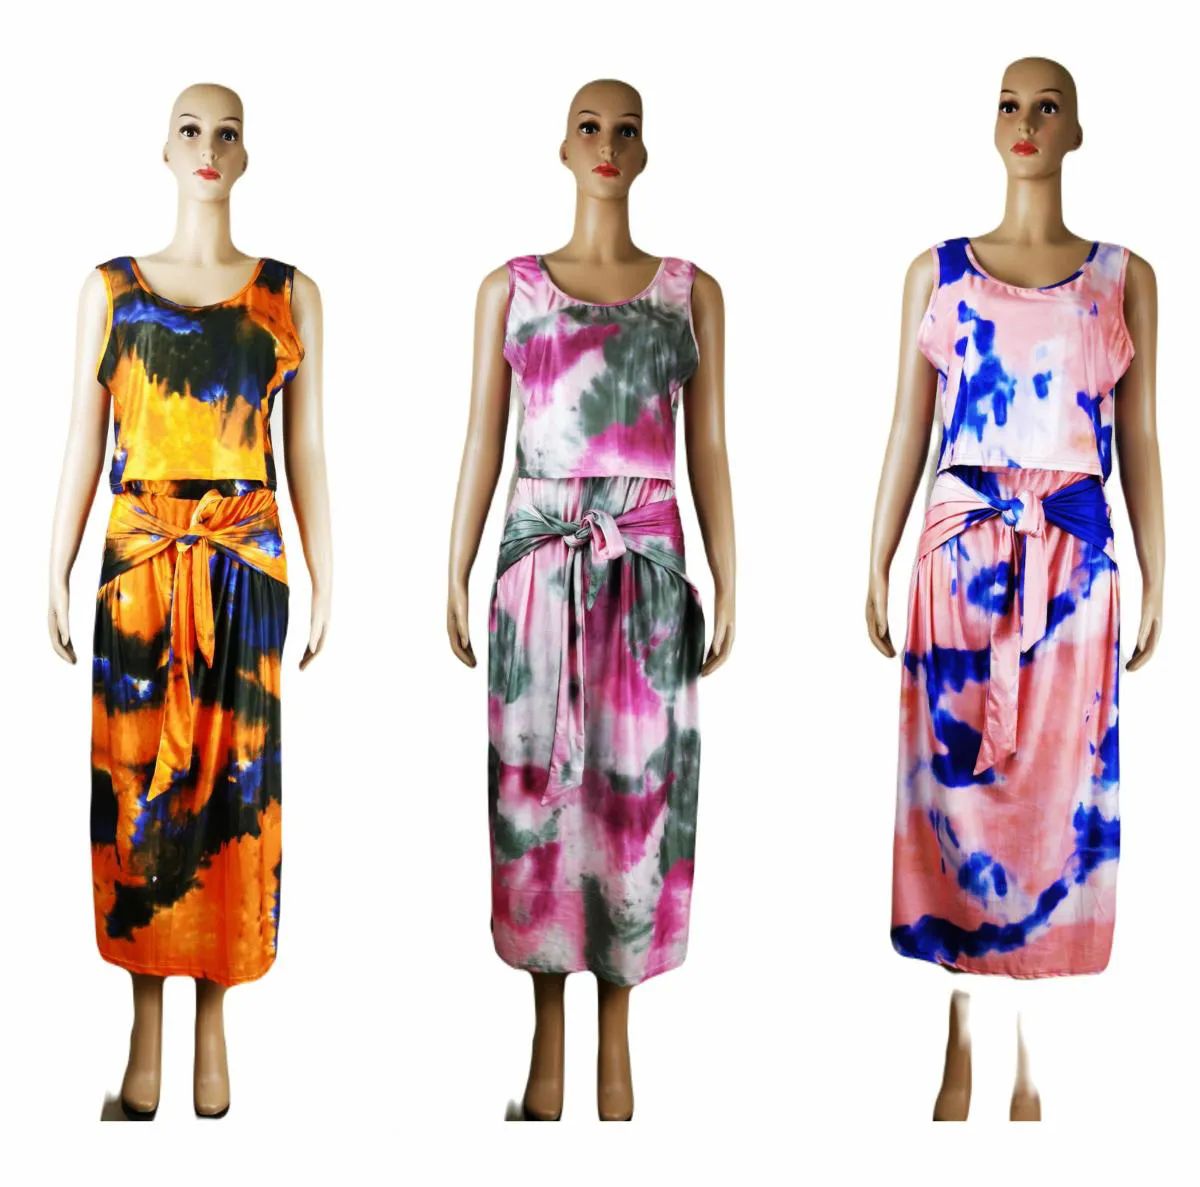 60 Pieces of Women's Tie Dye Sleeveless Set